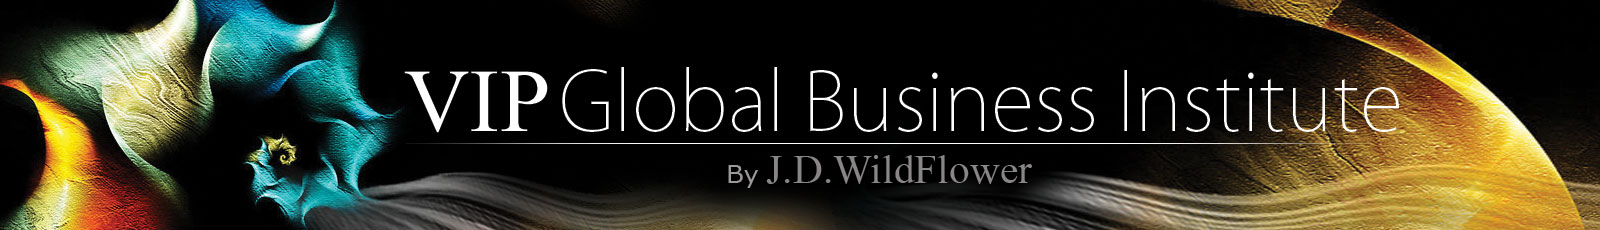 VIP Global Business Institute